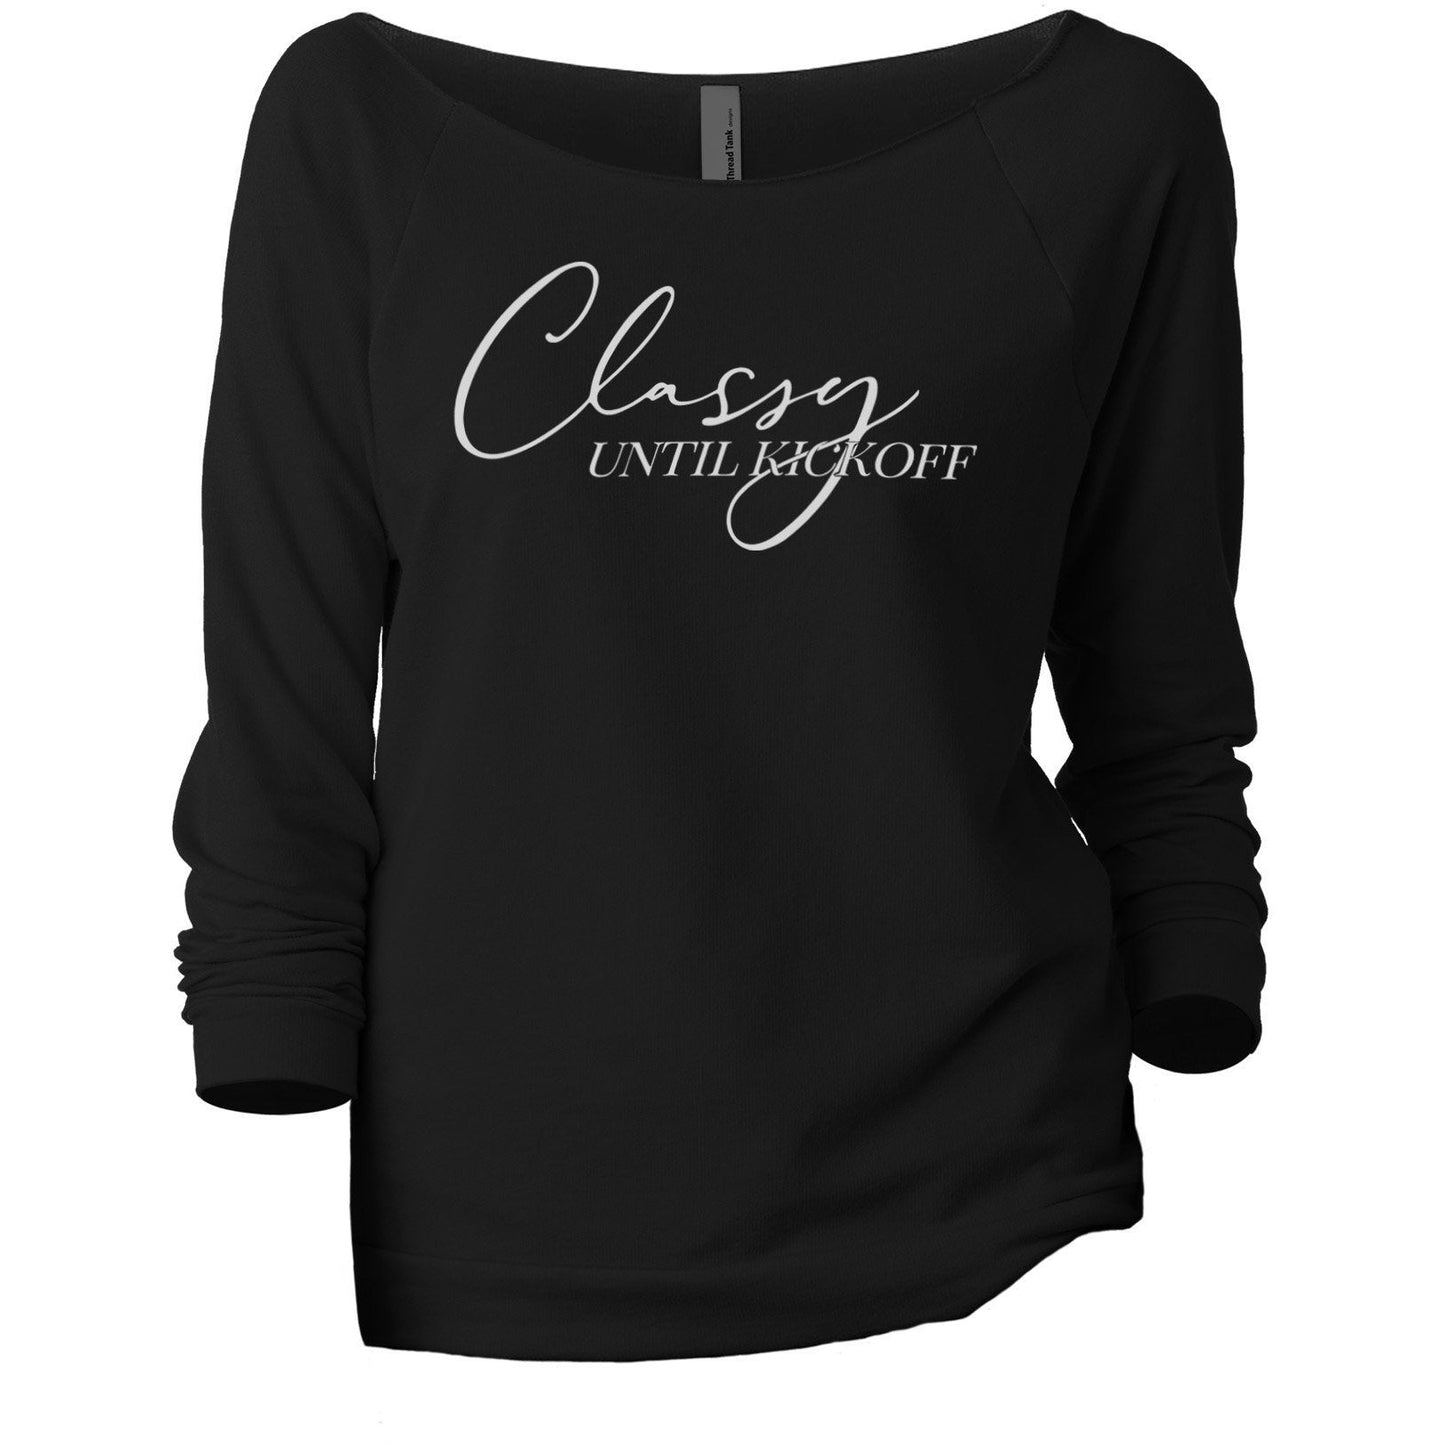 Classy Until Kickoff Women's Graphic Printed Lightweight Slouchy 3/4 Sleeves Sweatshirt Black